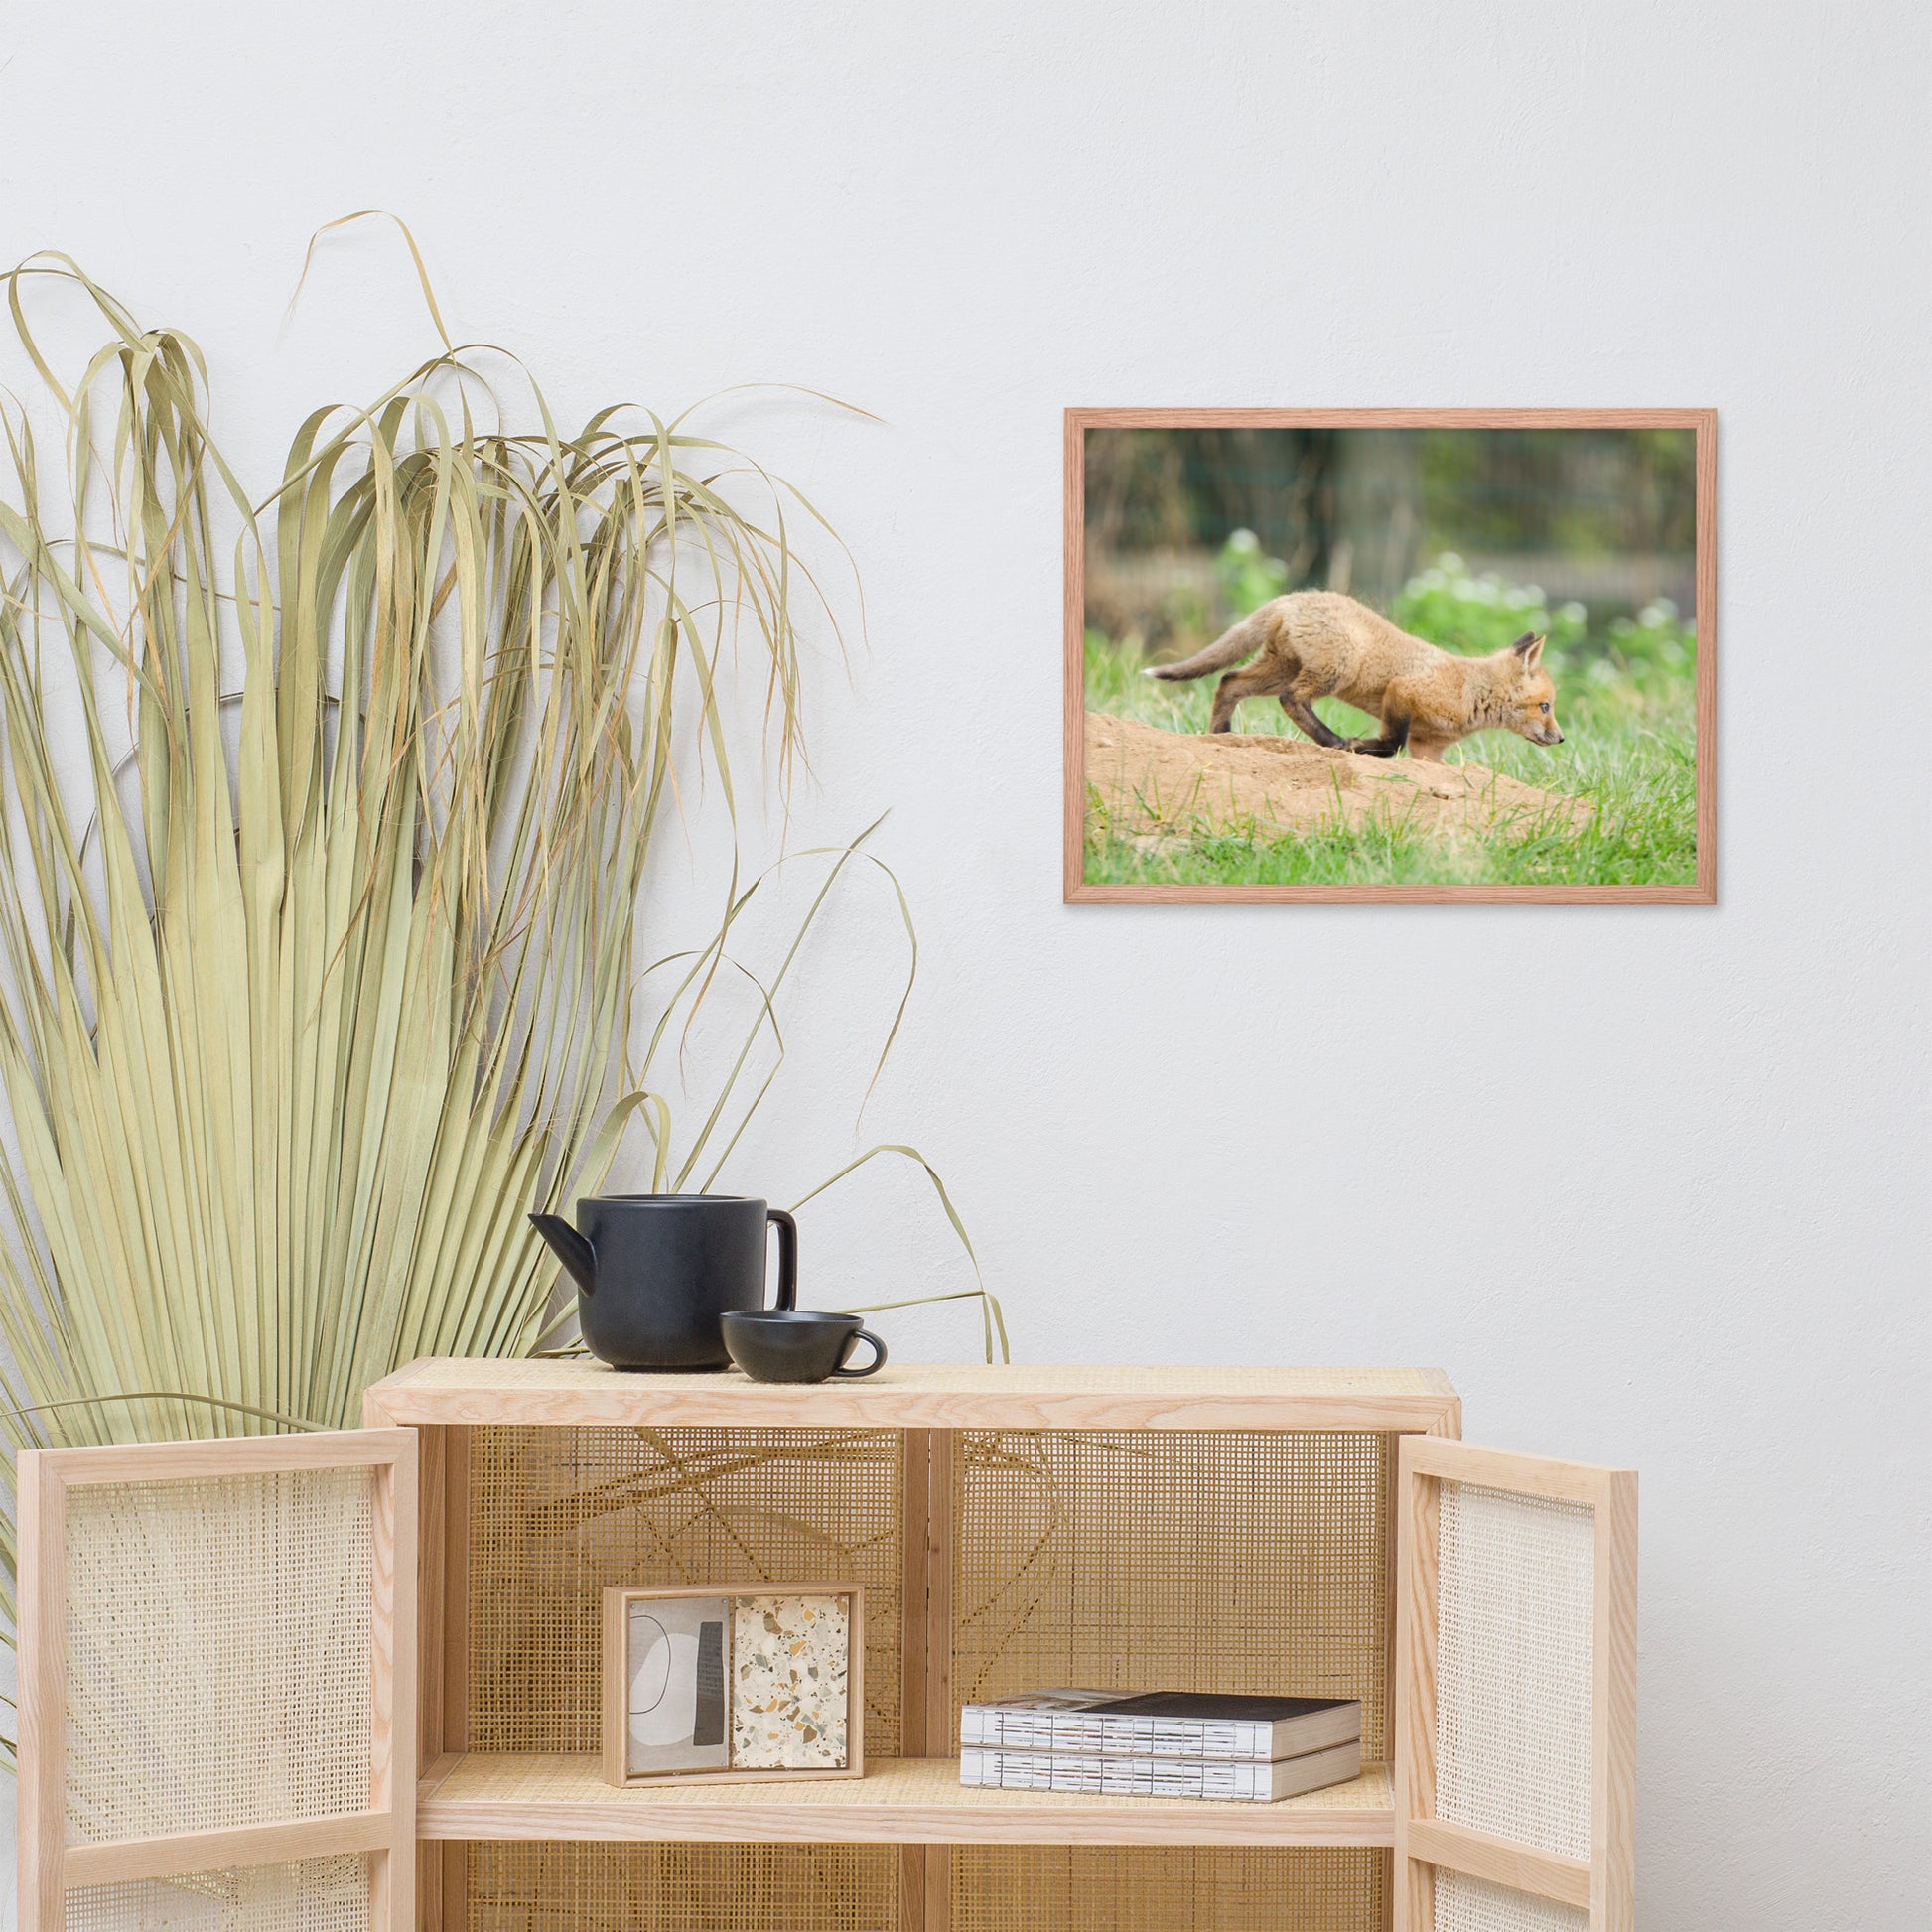 Nursery Wall Decor Animals: Baby Fox Pup In Meadow - Animal / Wildlife / Nature Artwork - Wall Decor - Framed Wall Art Print